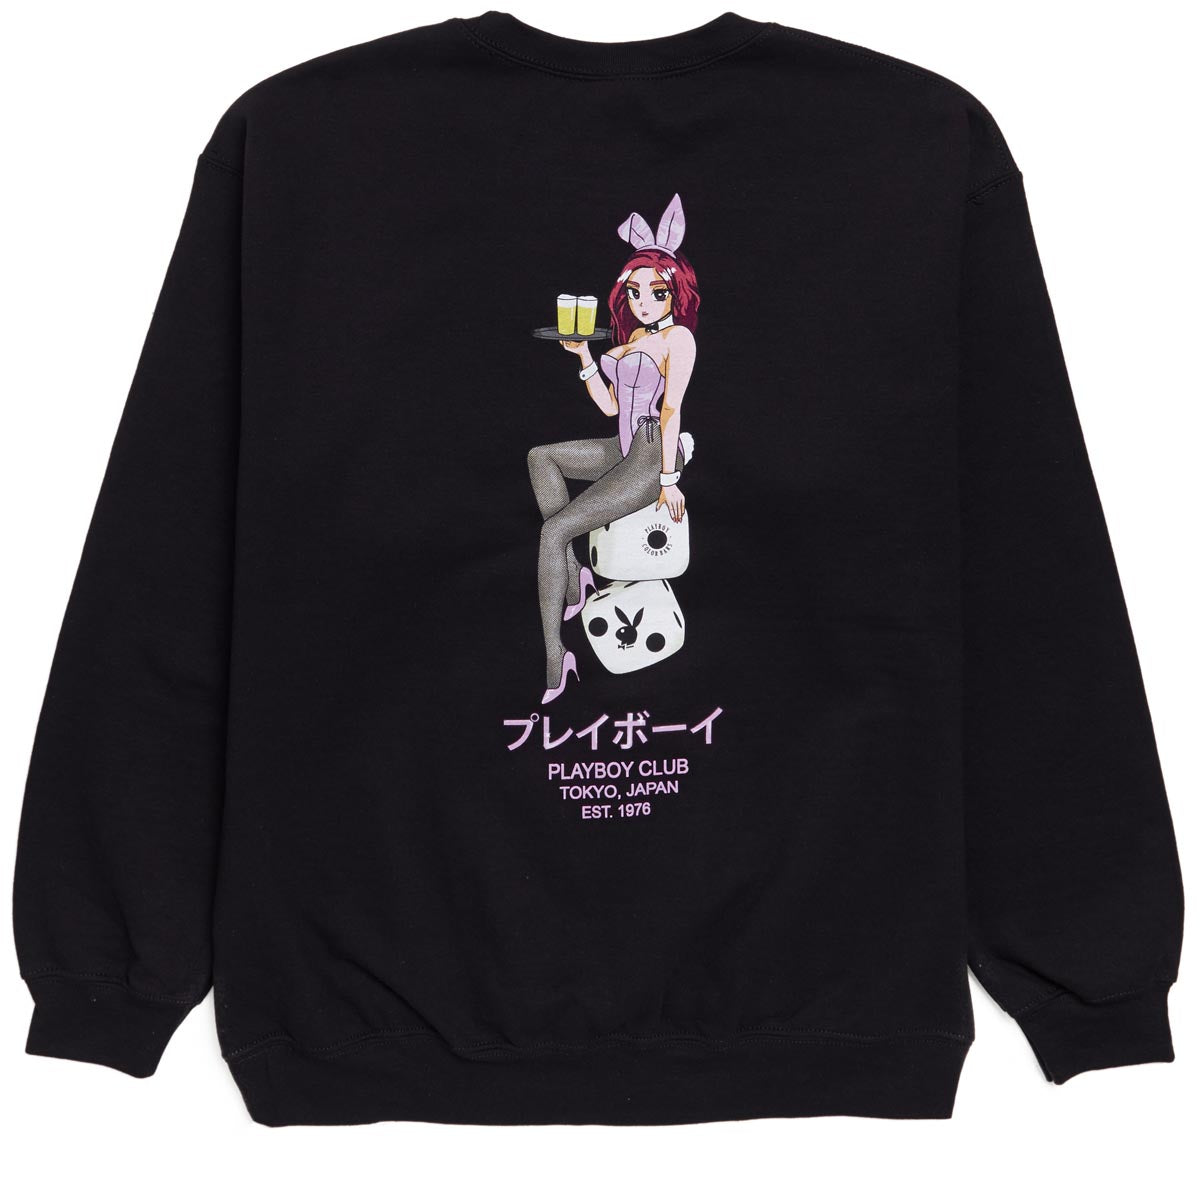 Color Bars x Playboy Tokyo Lady Luck Crewneck Sweatshirt - Black image 1